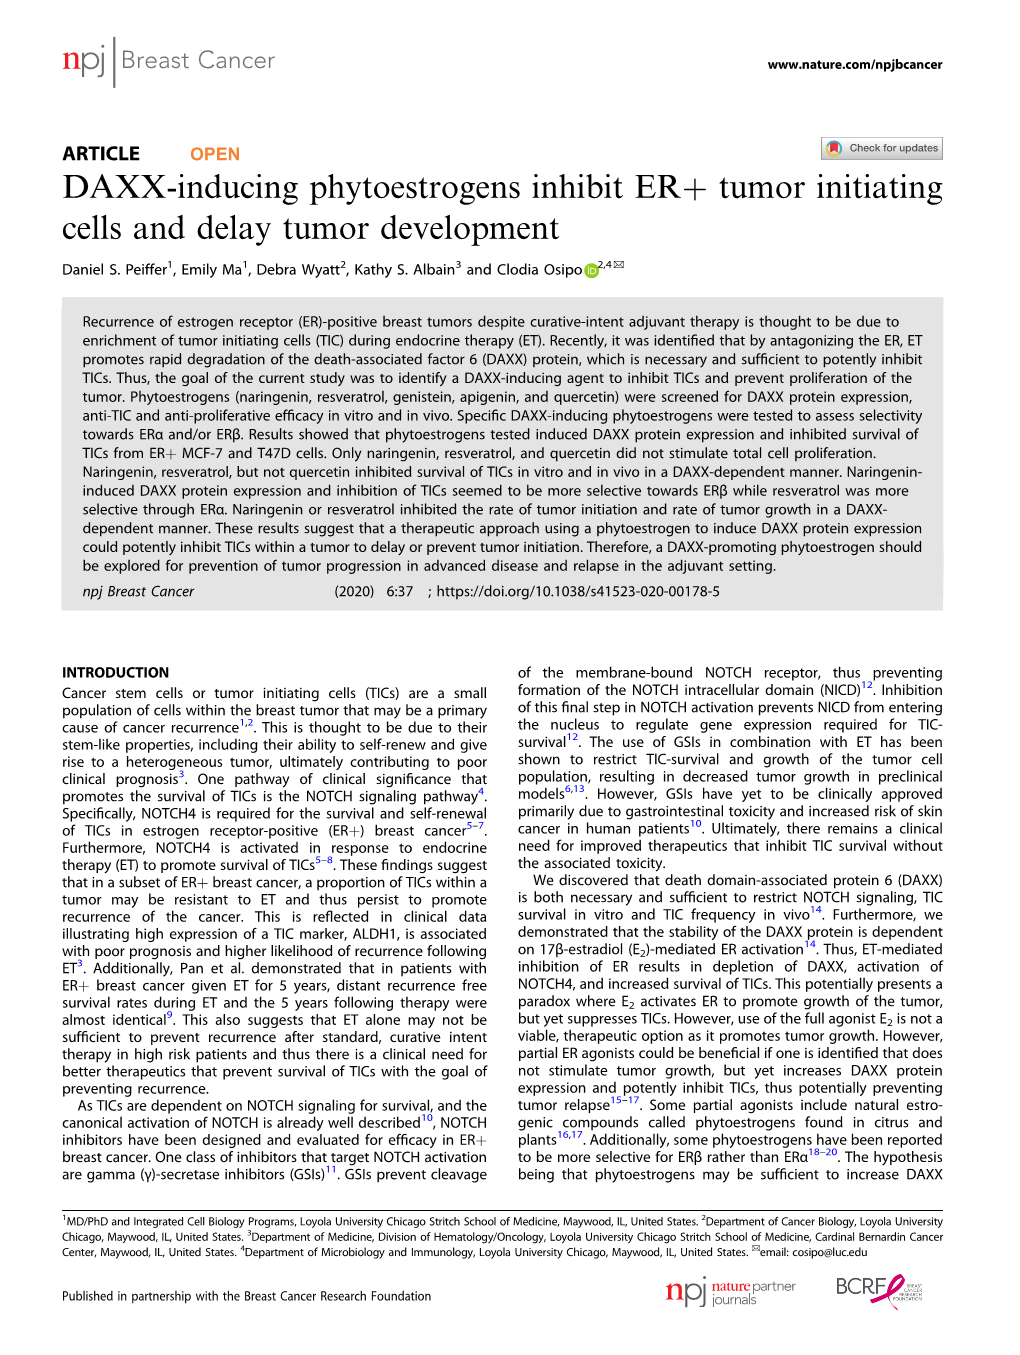 DAXX-Inducing Phytoestrogens Inhibit ER+ Tumor Initiating Cells and Delay Tumor Development ✉ Daniel S